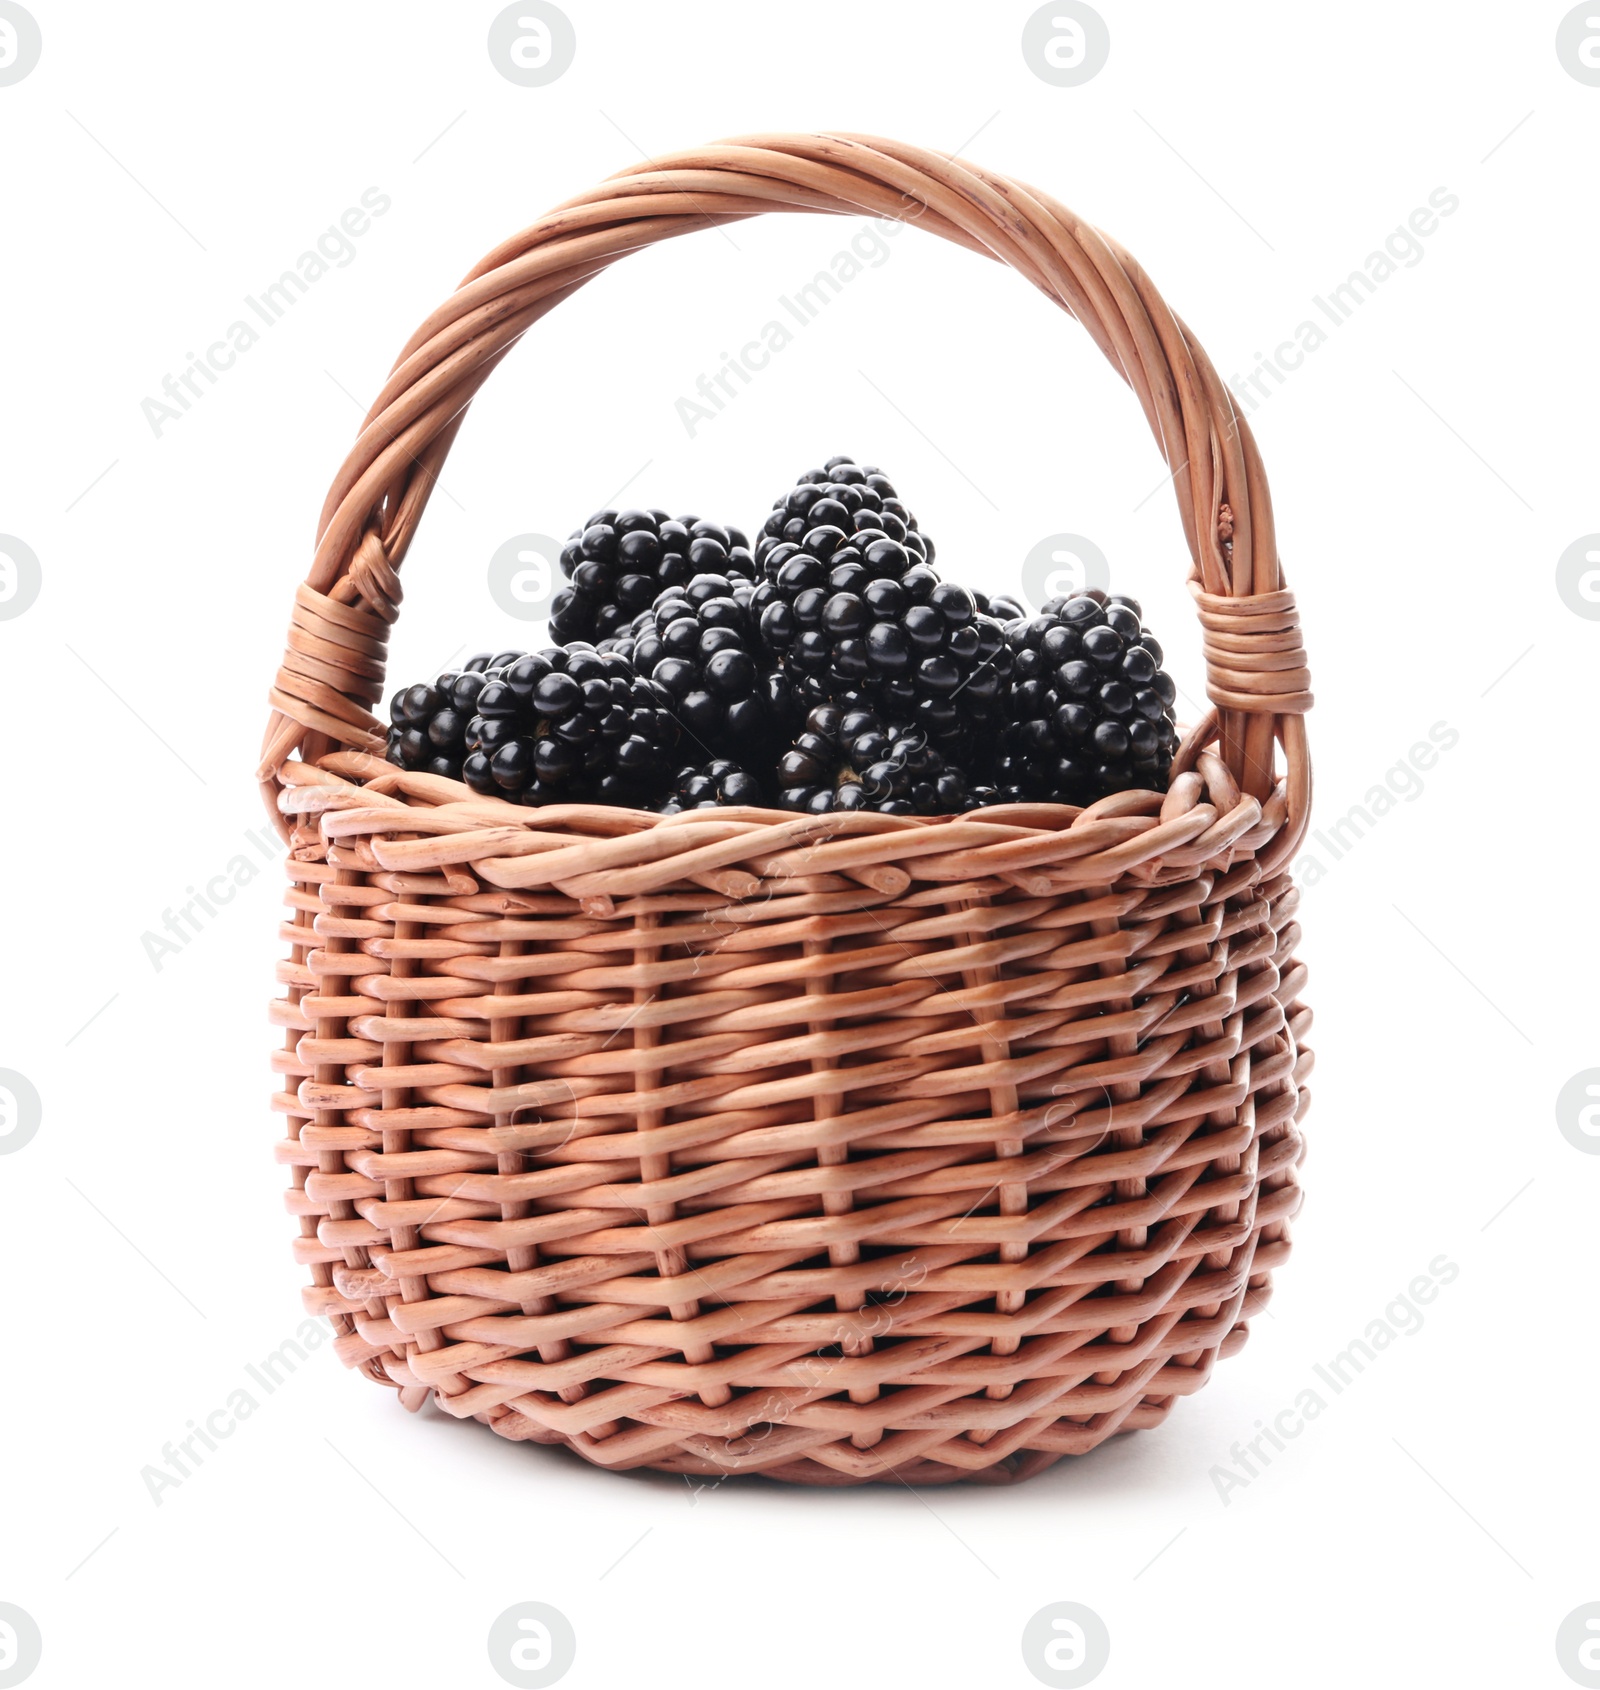 Photo of Wicker basket of tasty blackberries on white background